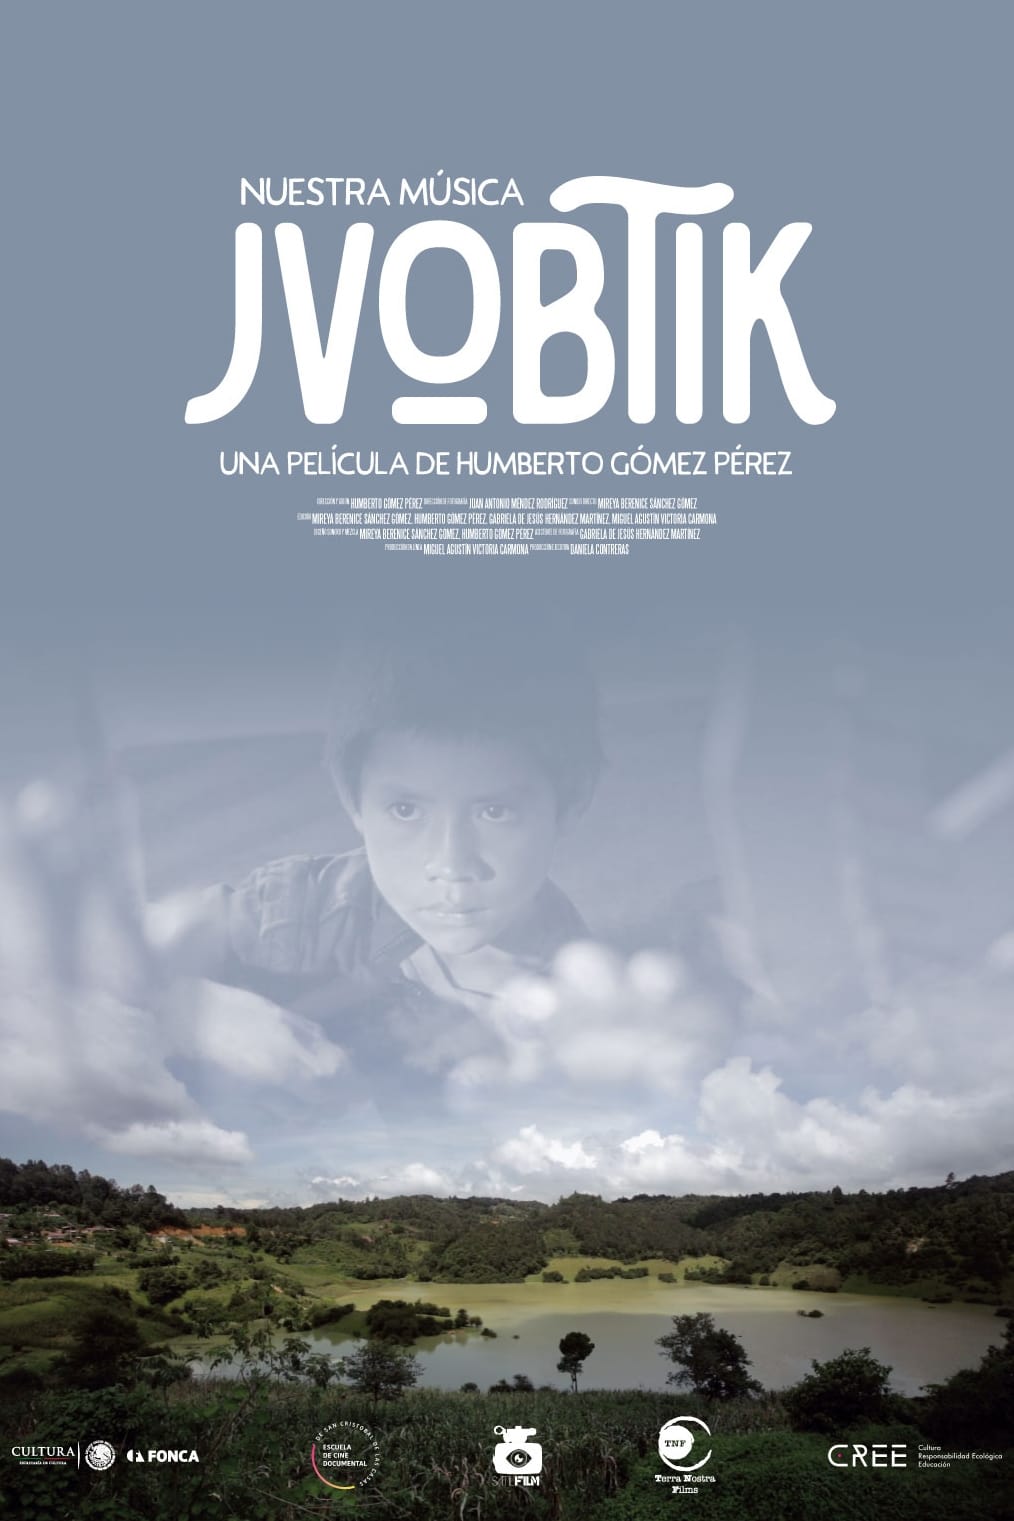 Jvobtik – Our Music